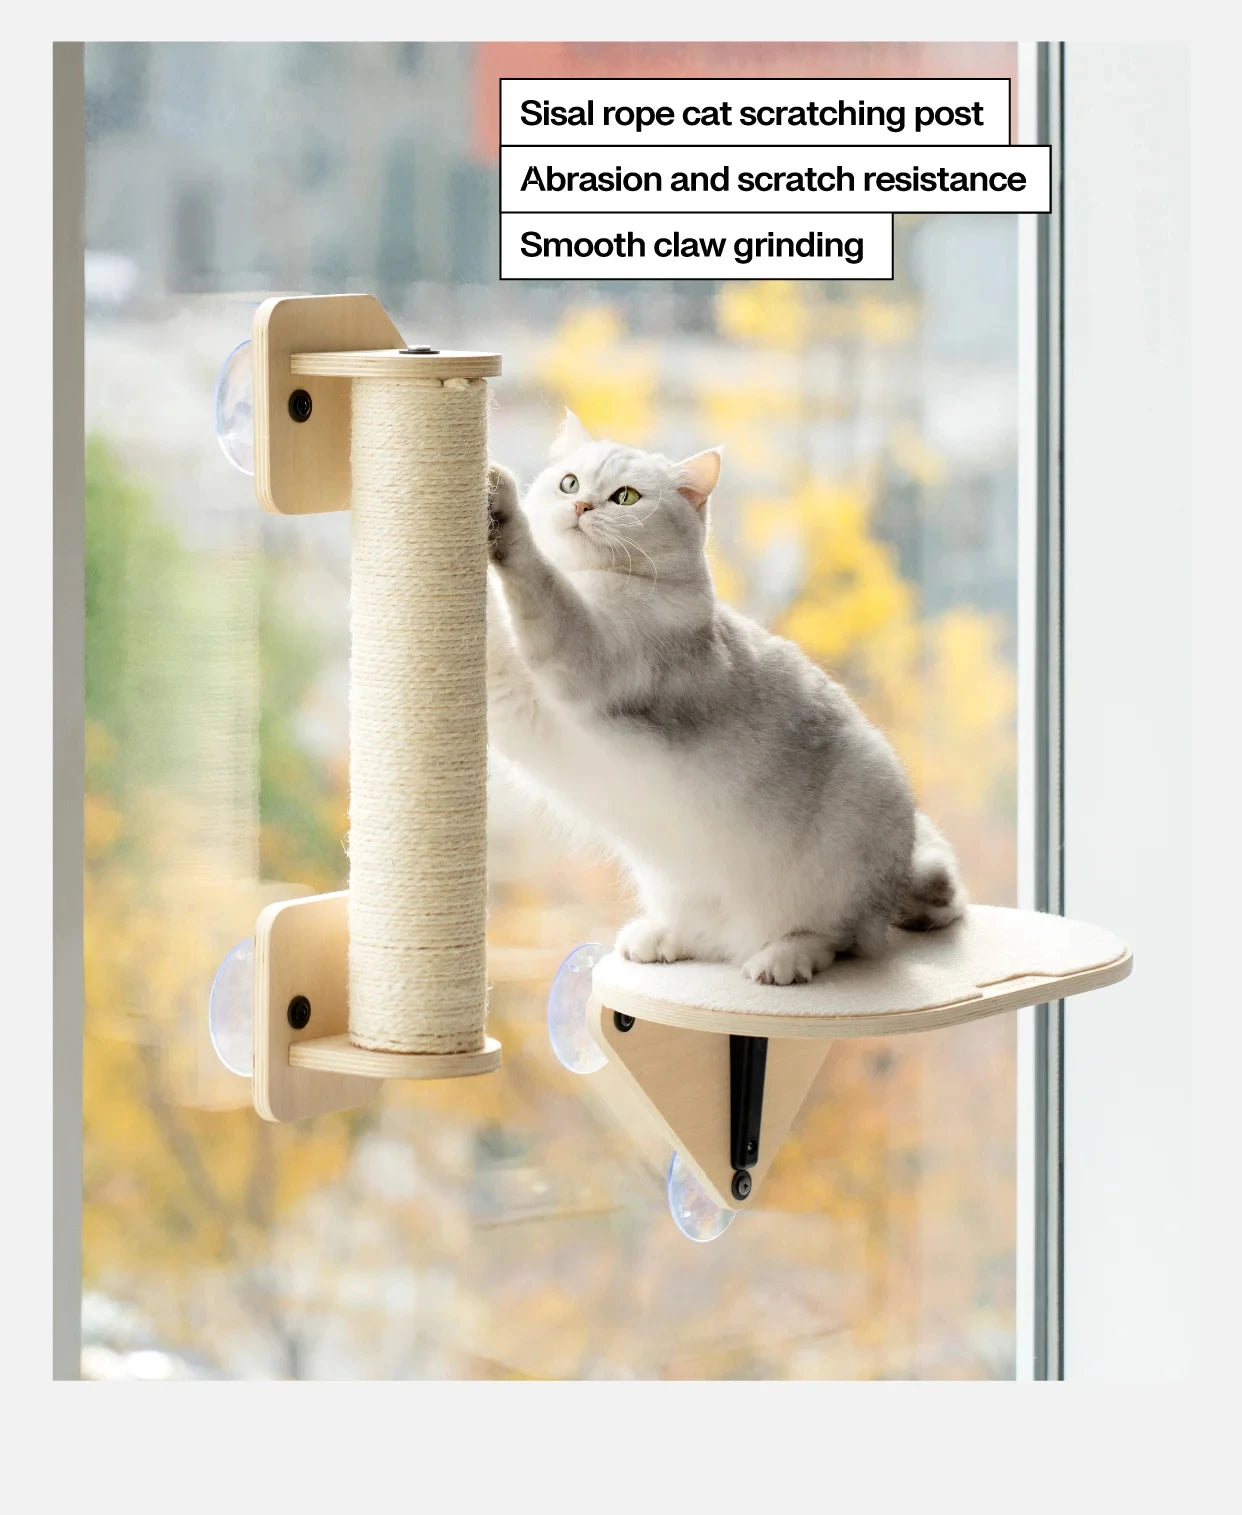 Mewoofun Air Cat Climbing Frame Glass Suction Cup Wall